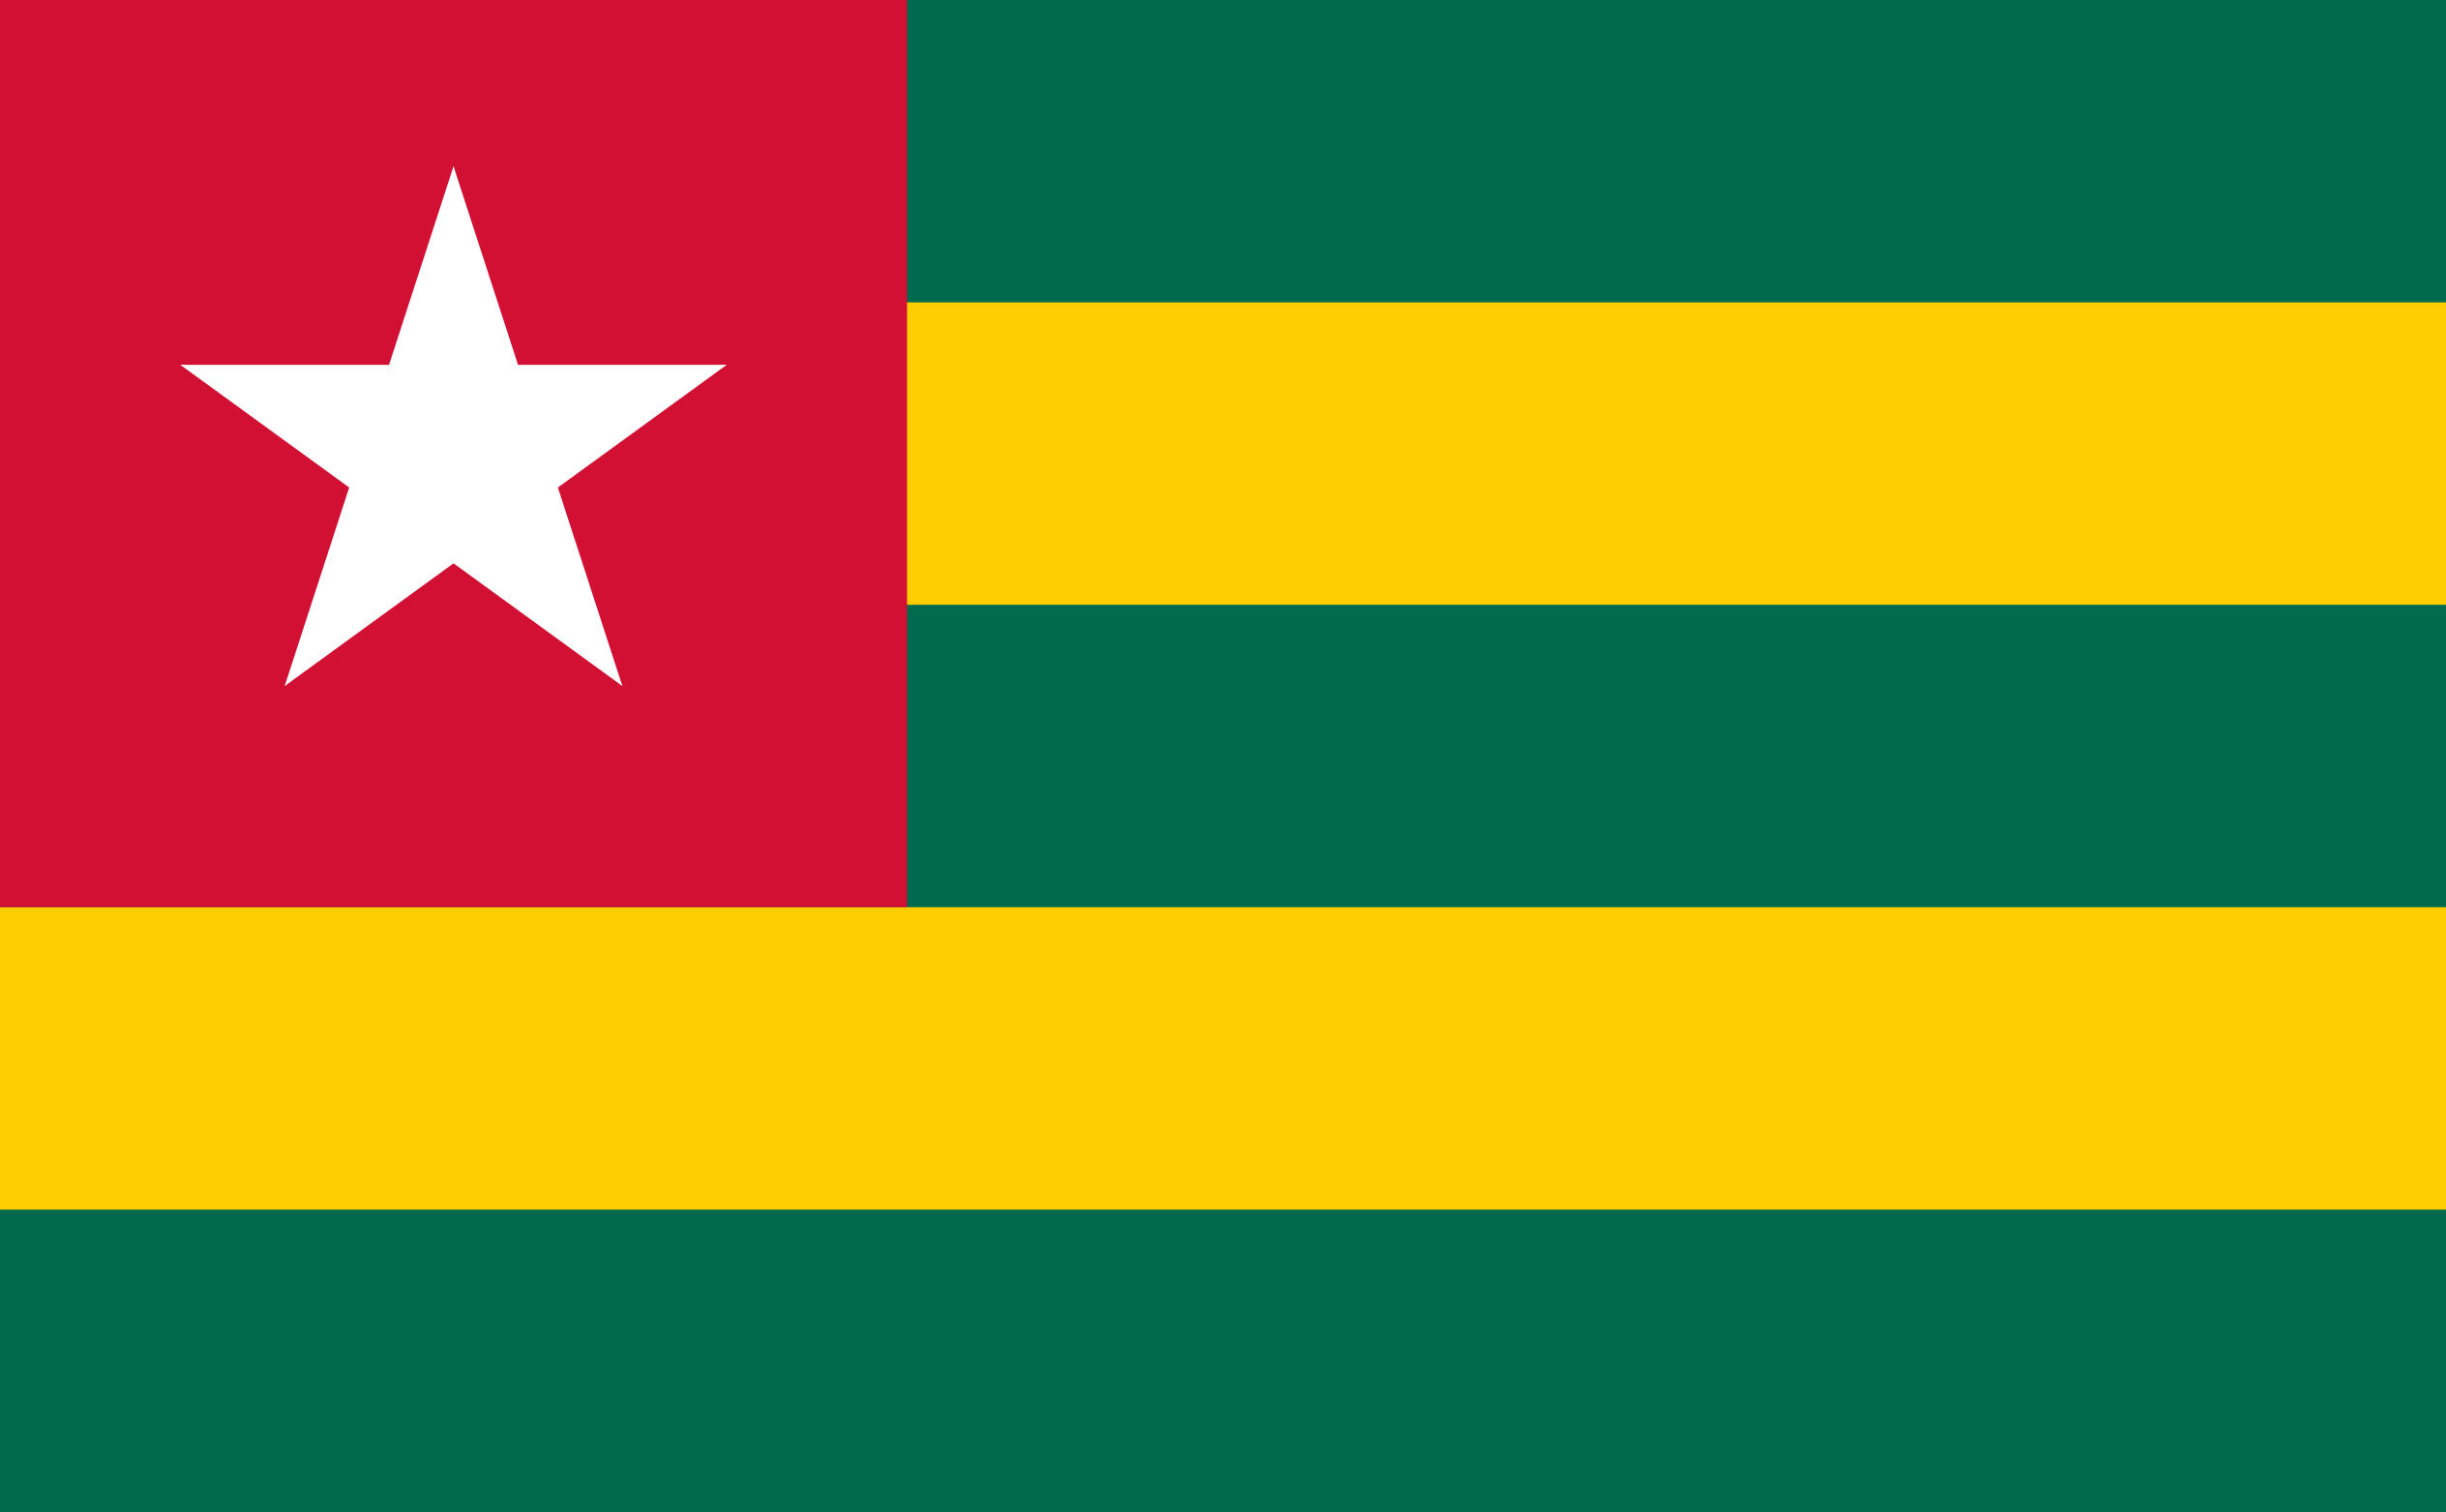 Free Togo Flag Documents: PDF, DOC, DOCX, HTML & More!